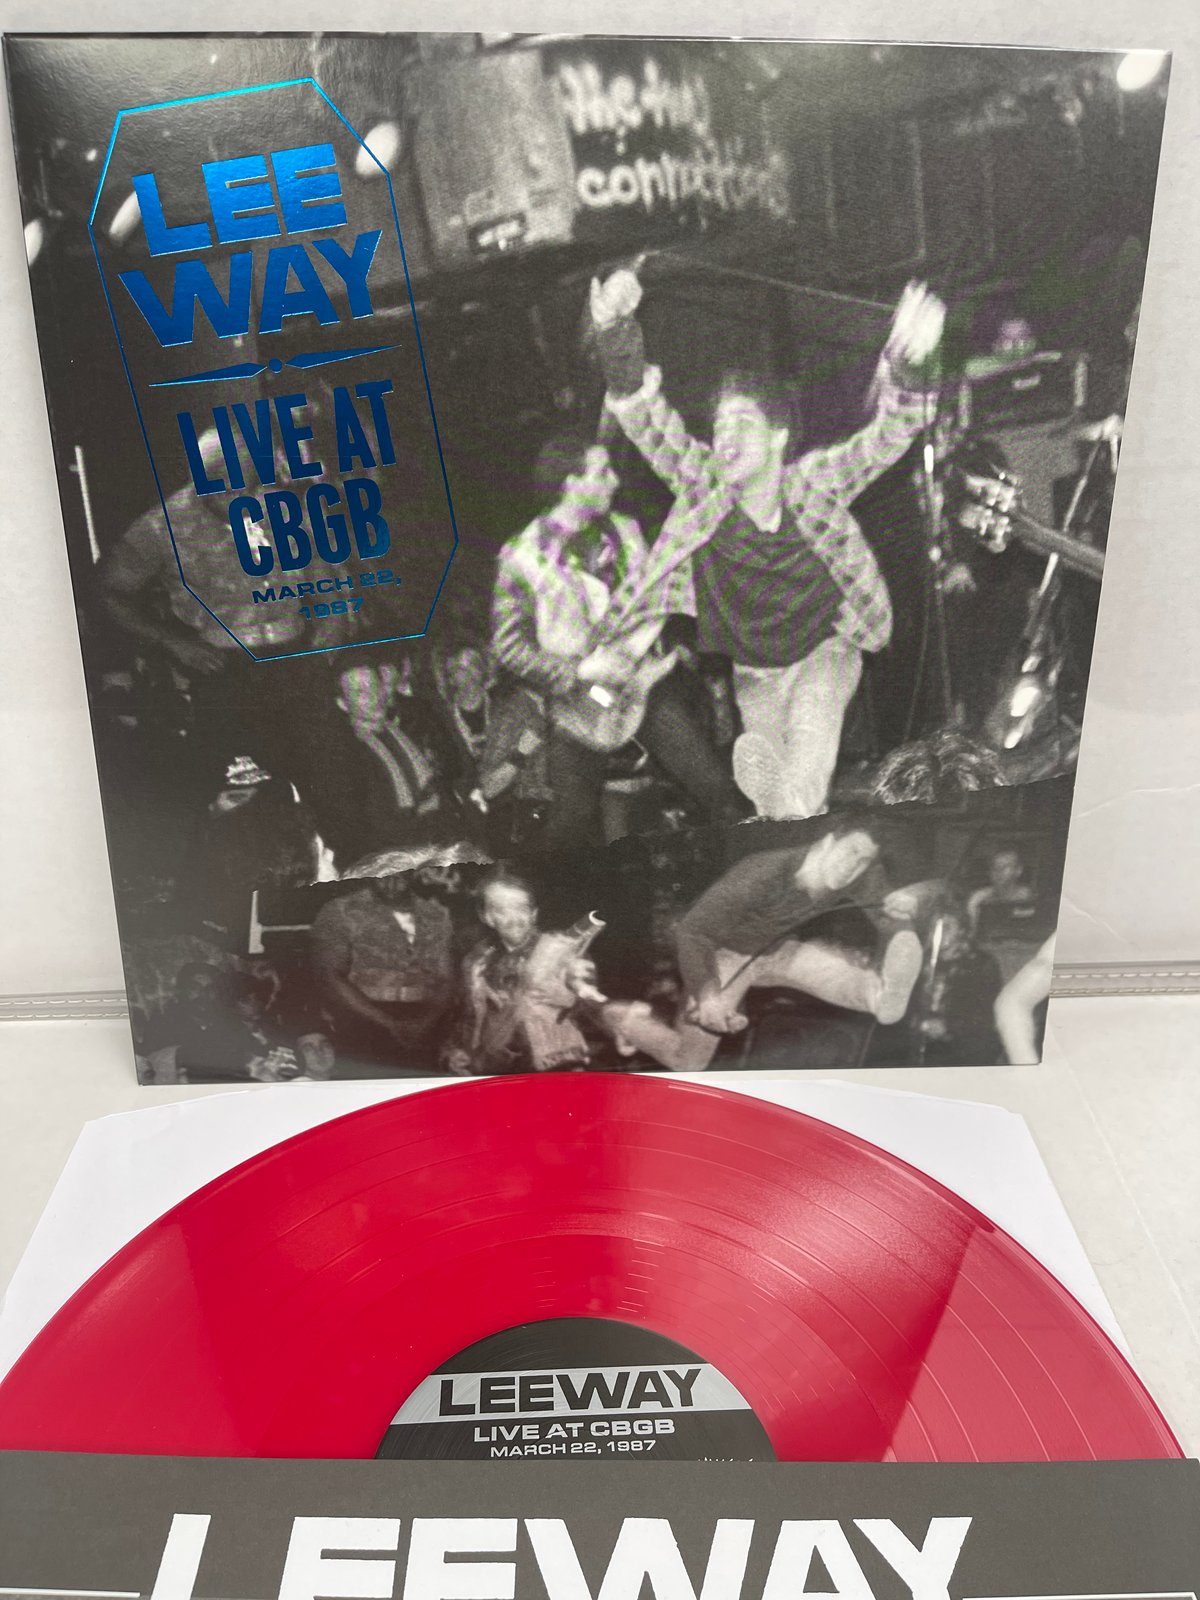 Image of Leeway-Live At CBGB March 22, 1987 Red Vinyl LP